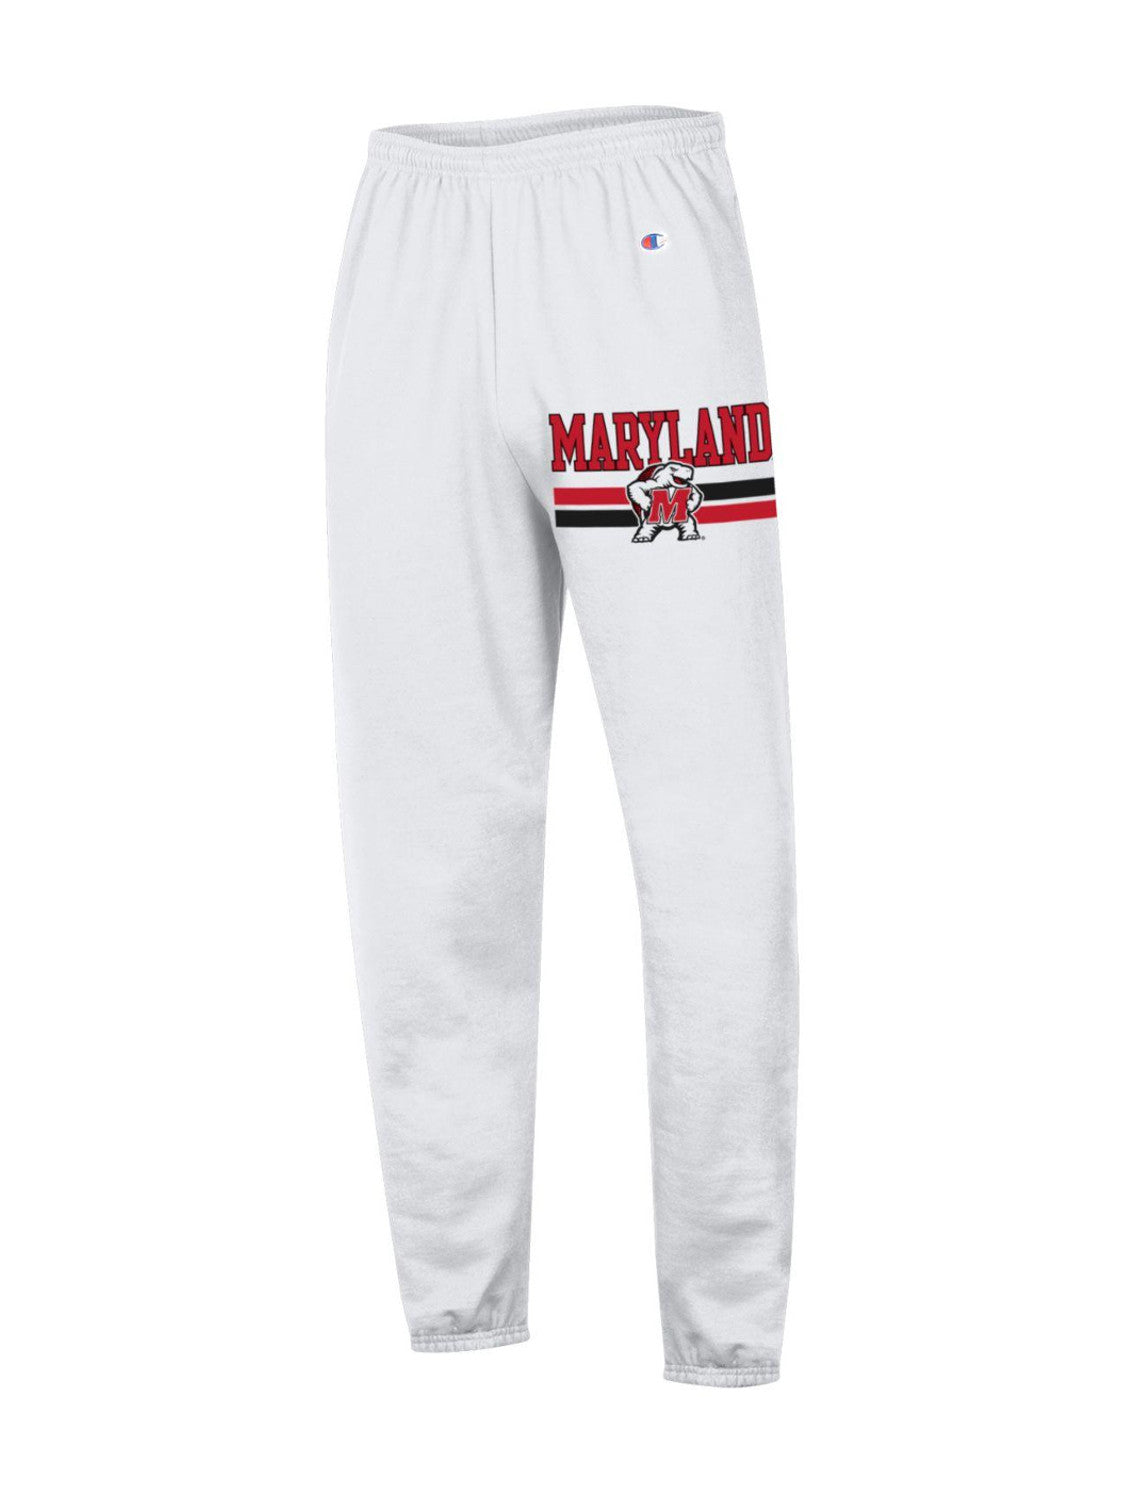 champion-university-of-maryland-sweatpants-white